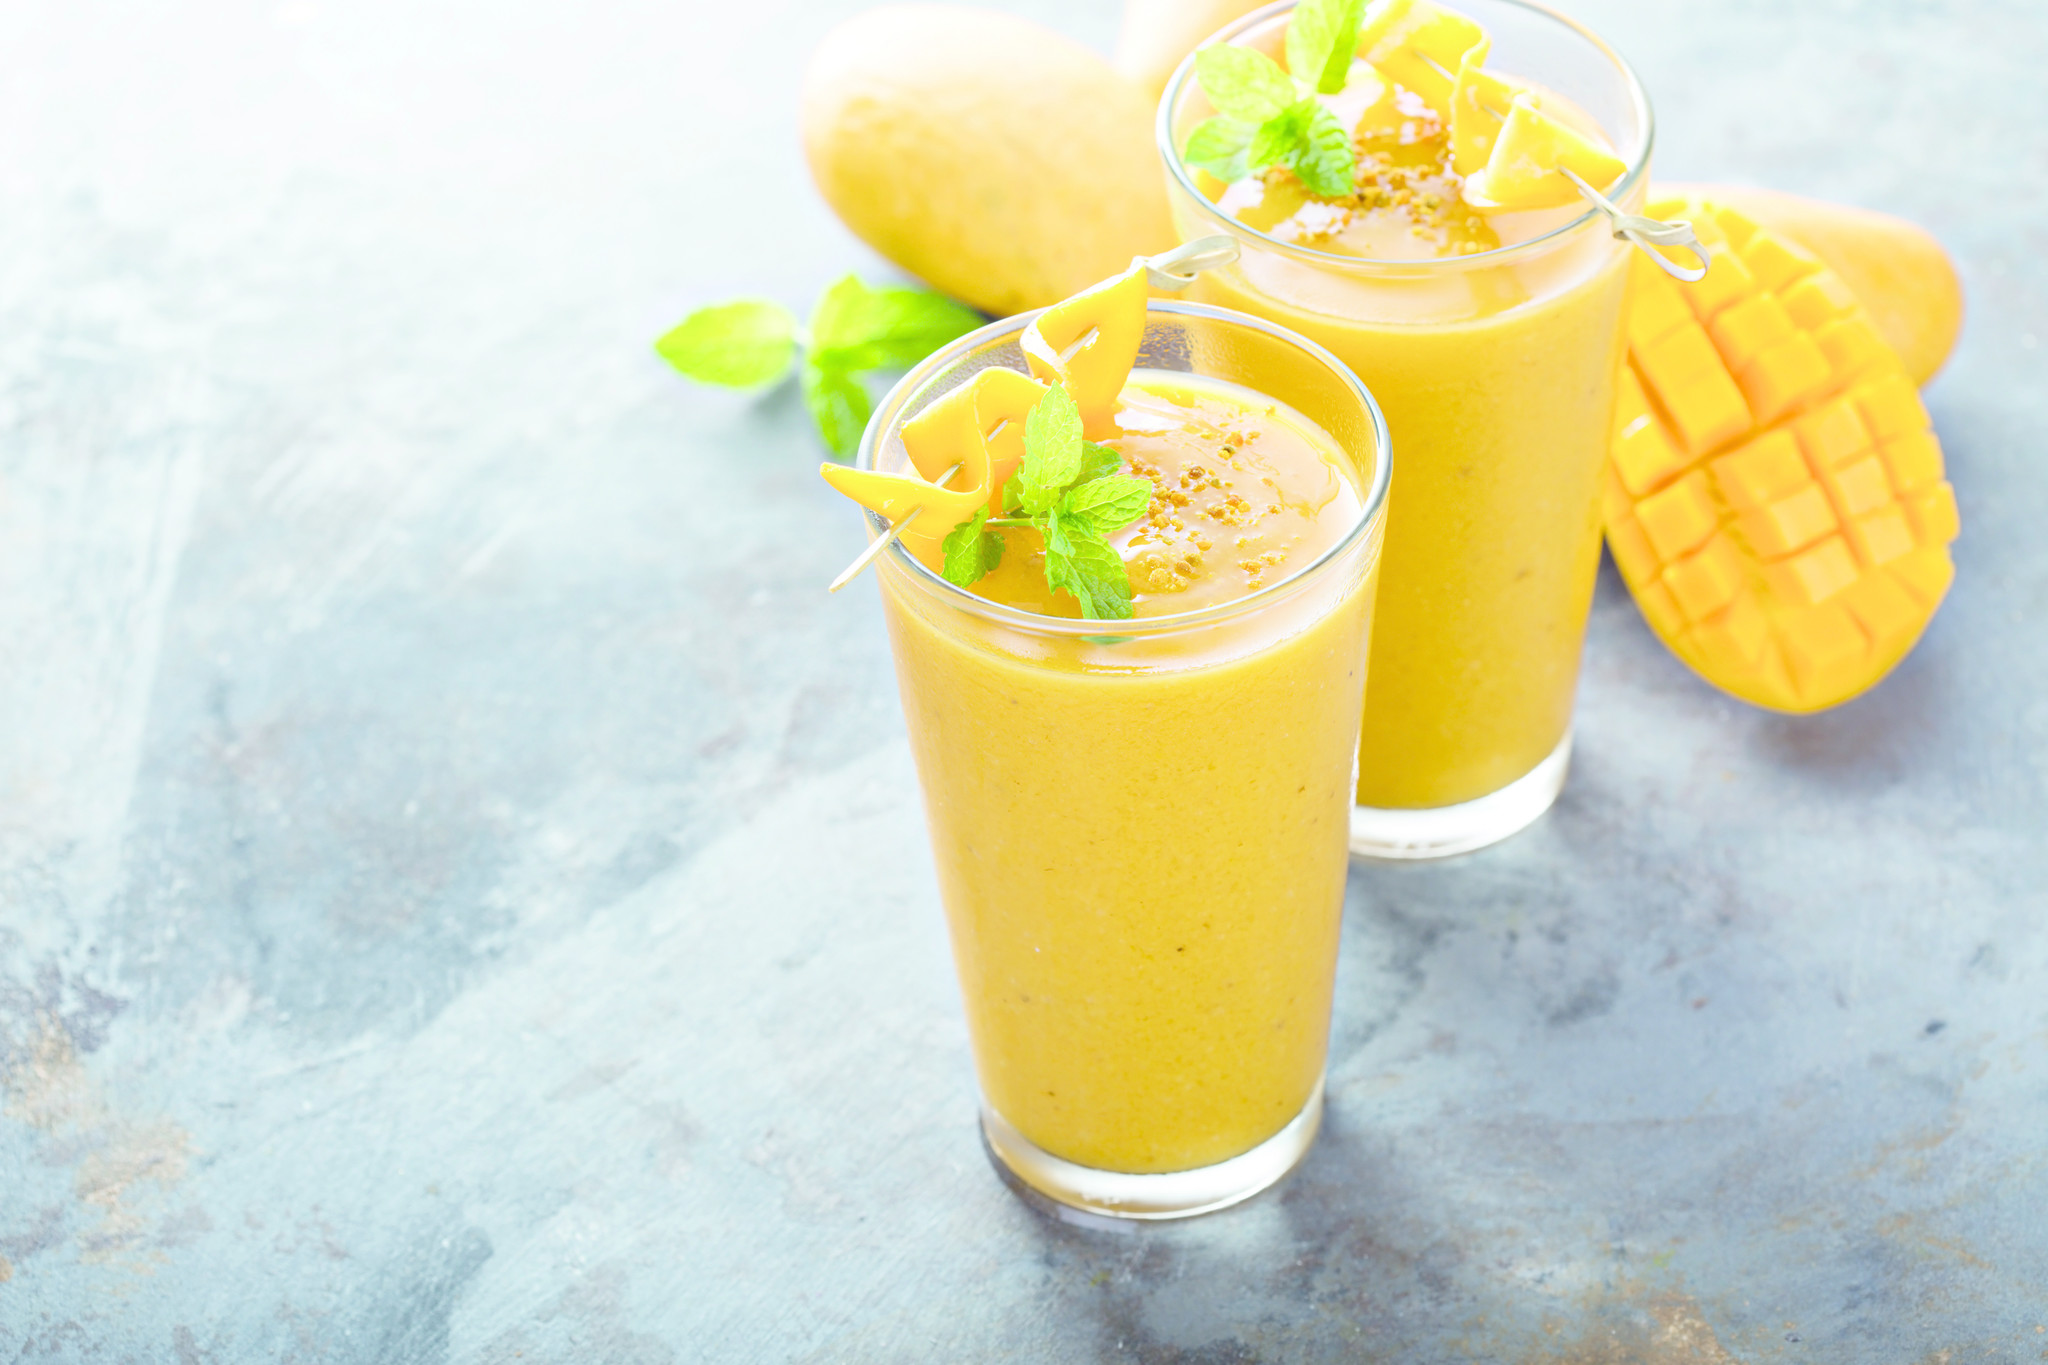 How to make Indian Mango Shake?